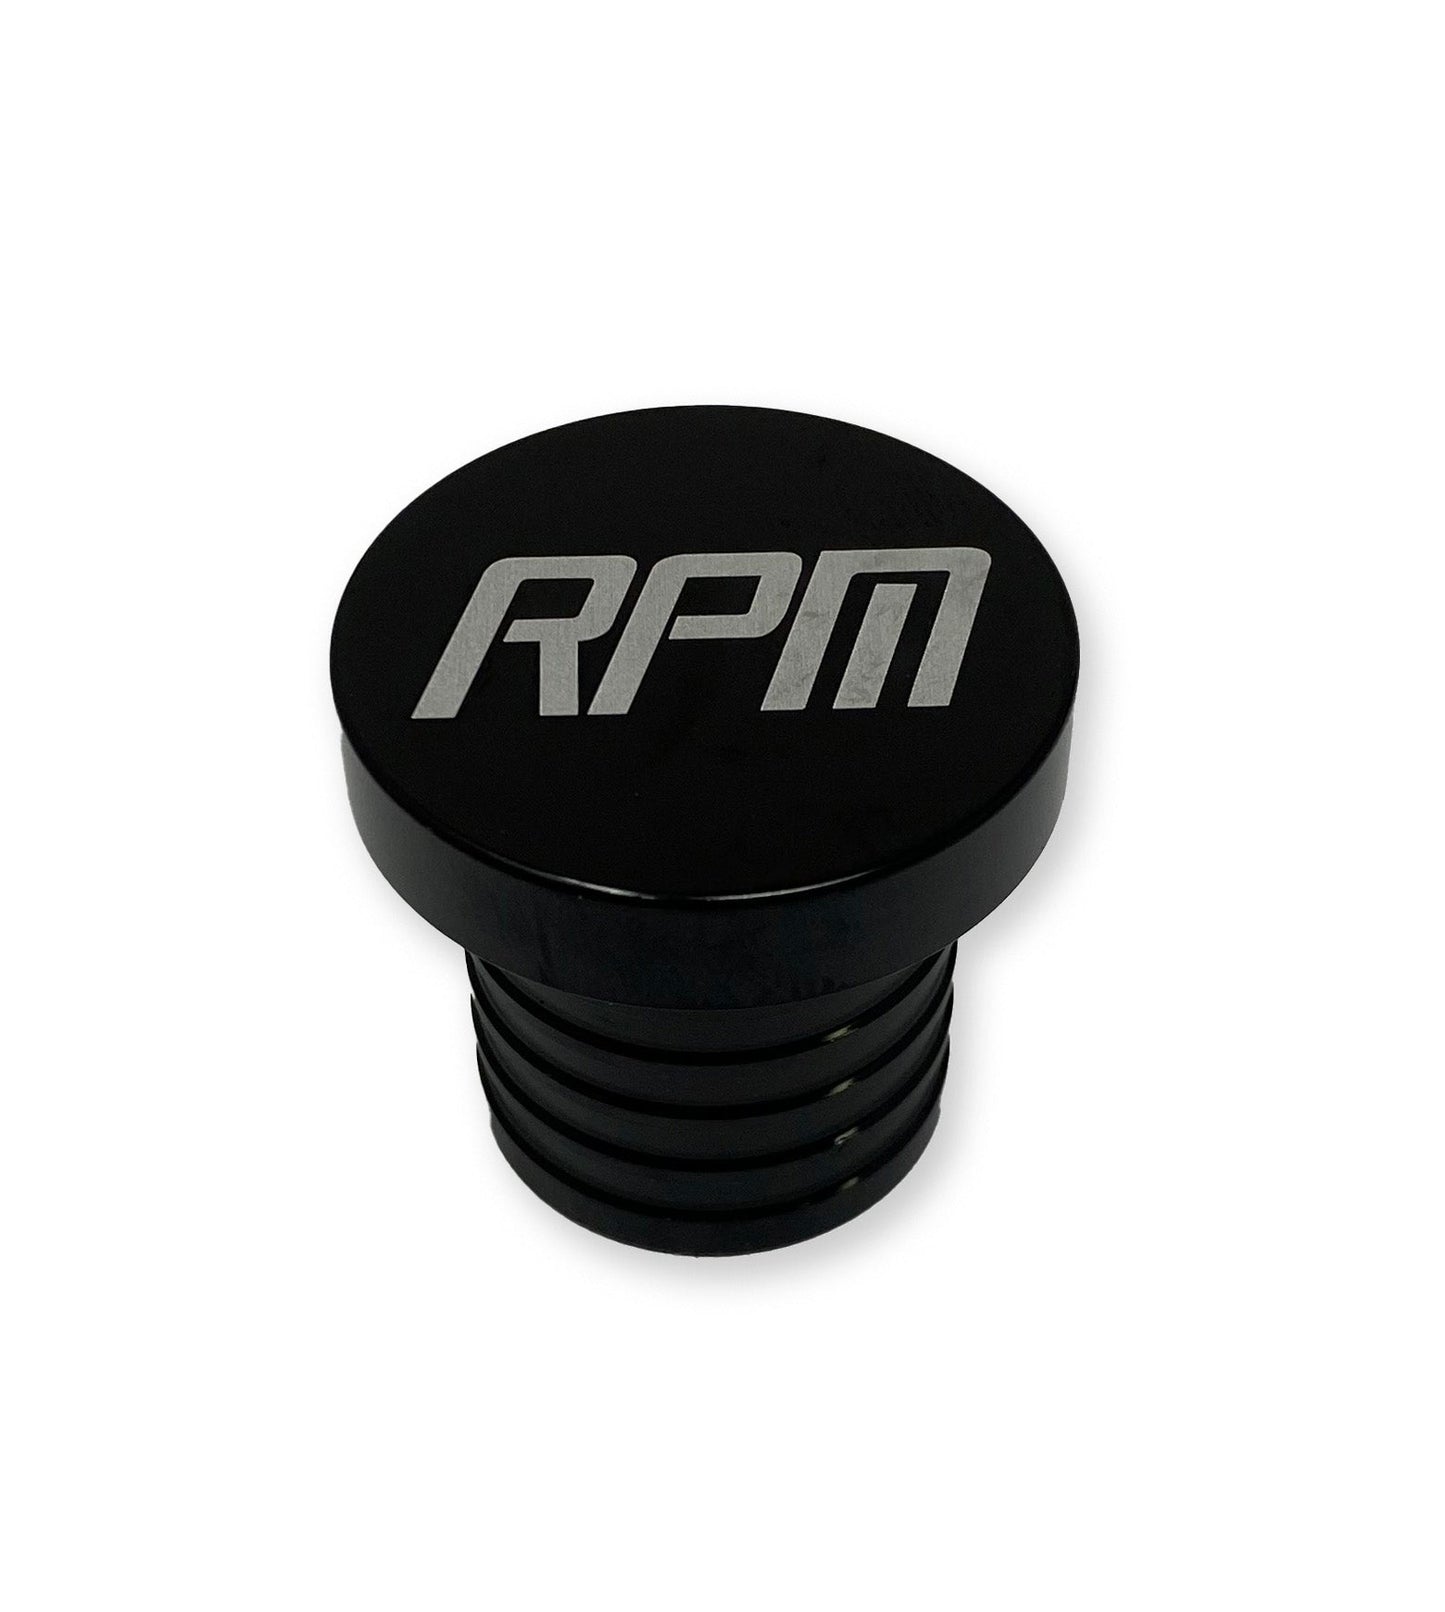 RPM-SxS Can Am X3 BOV Kit